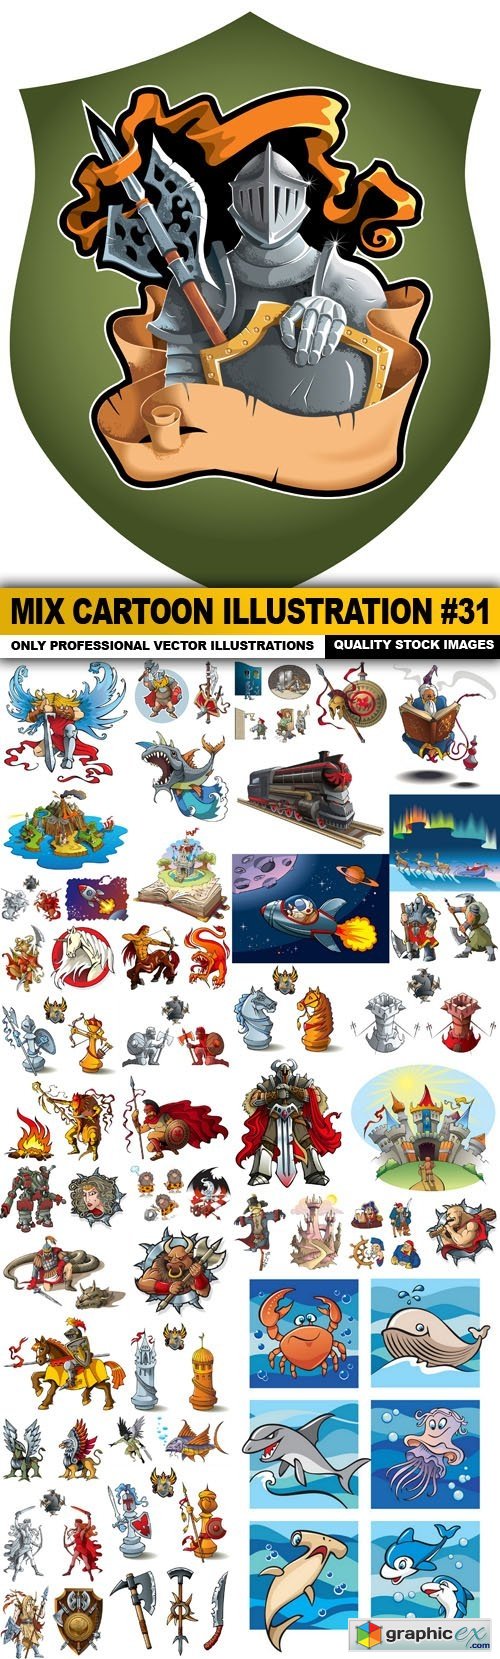 Mix cartoon Illustration #31